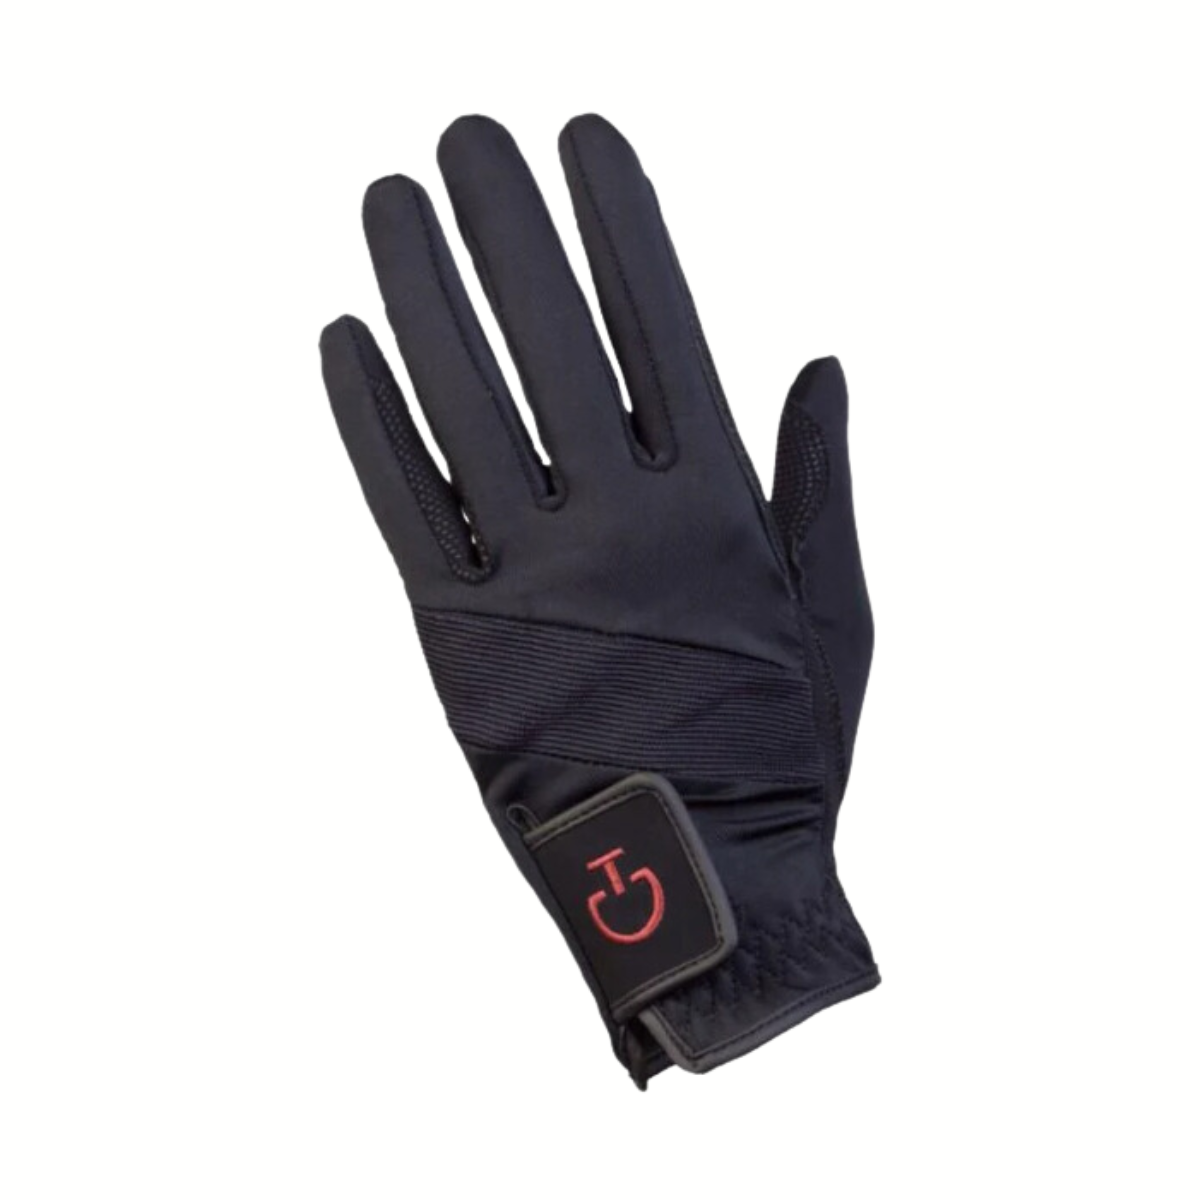 Cavalleria Toscana Tech Gloves in Black - 6